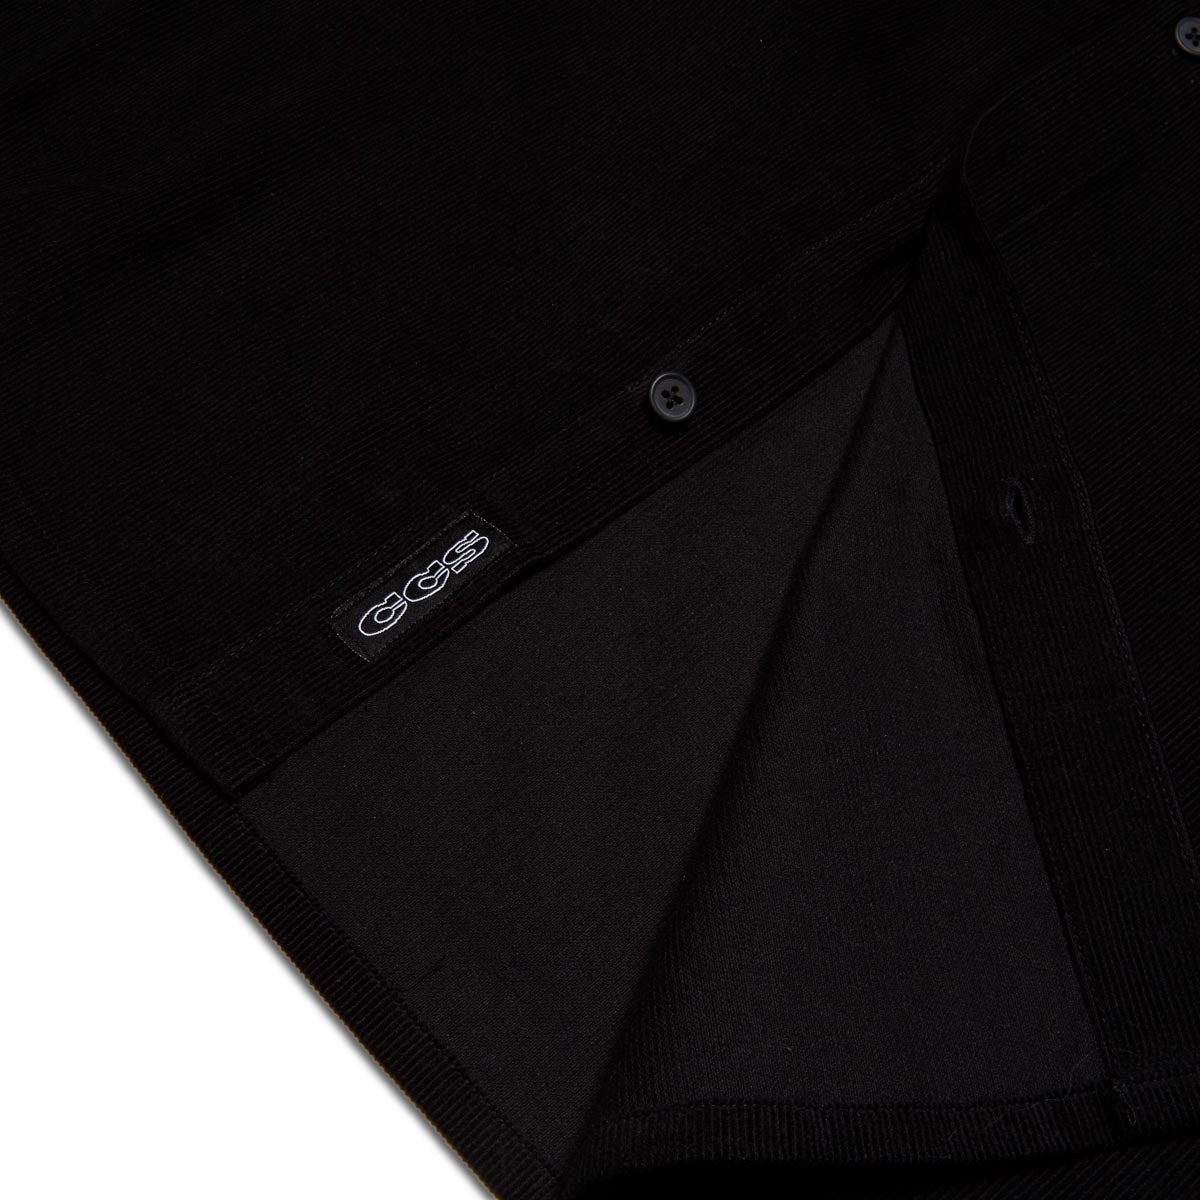 CCS Long Sleeve Corduroy Shirt - Black image 5